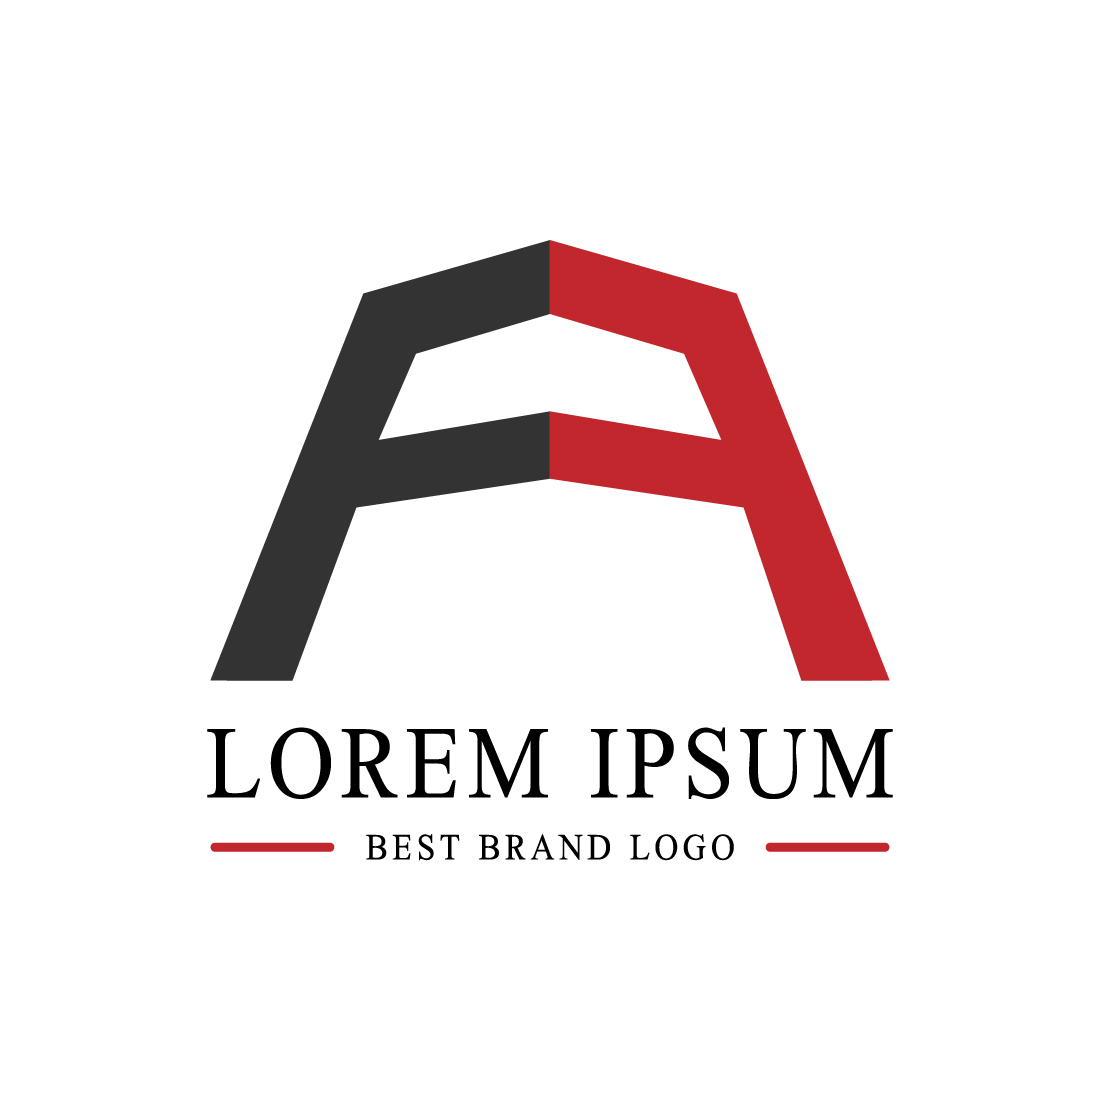 A letters logo design vector icon FF logo monogram icon design A logo design red and black preview image.